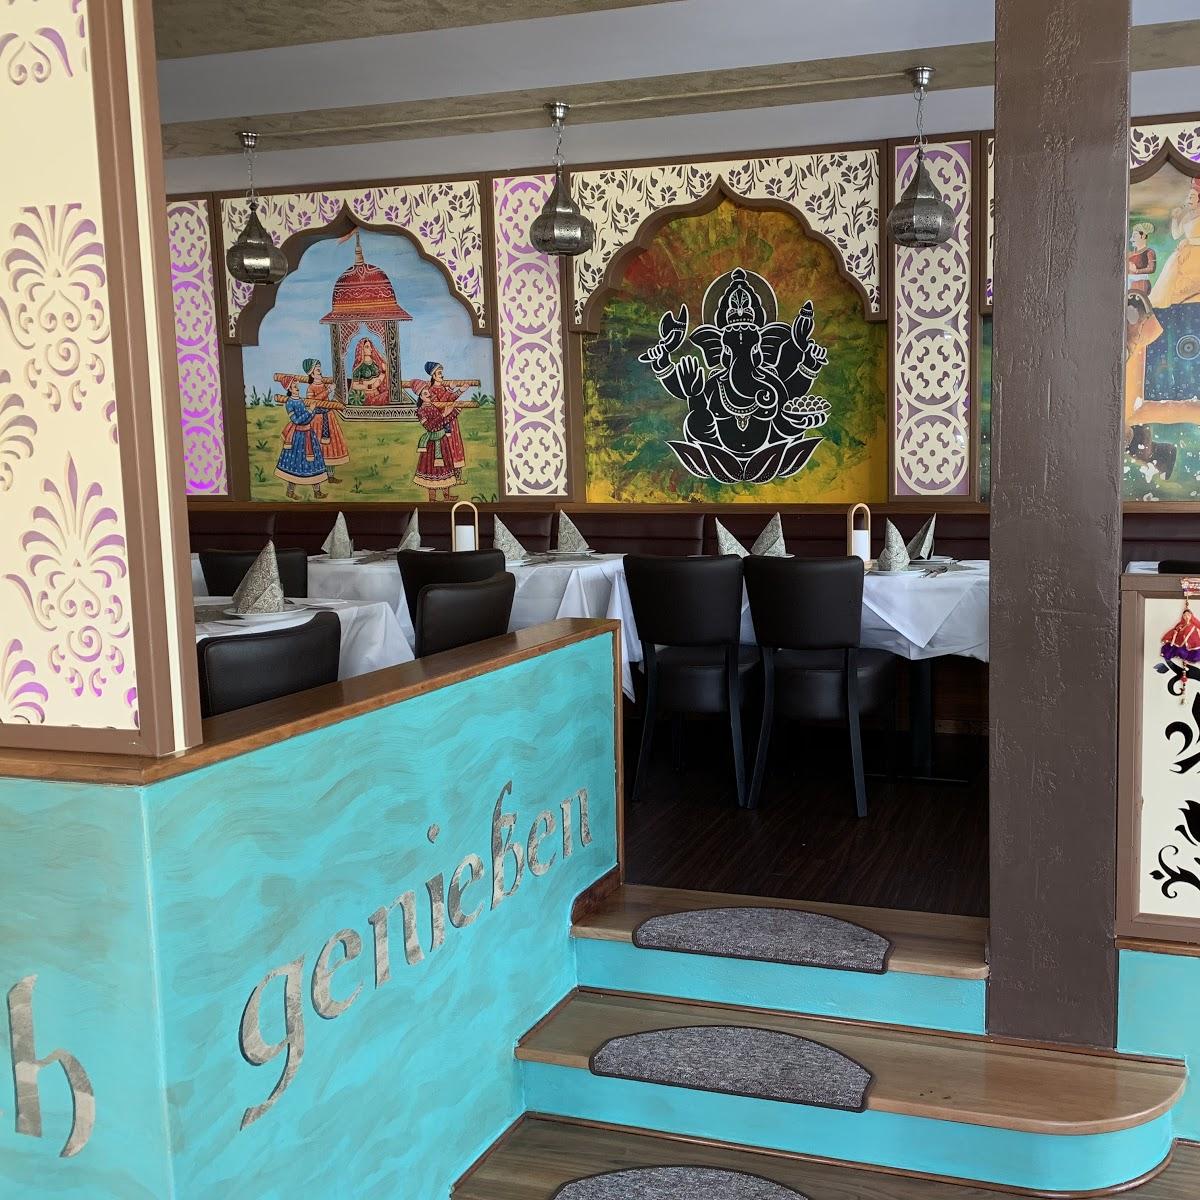 Restaurant "Ganesha" in Zwickau